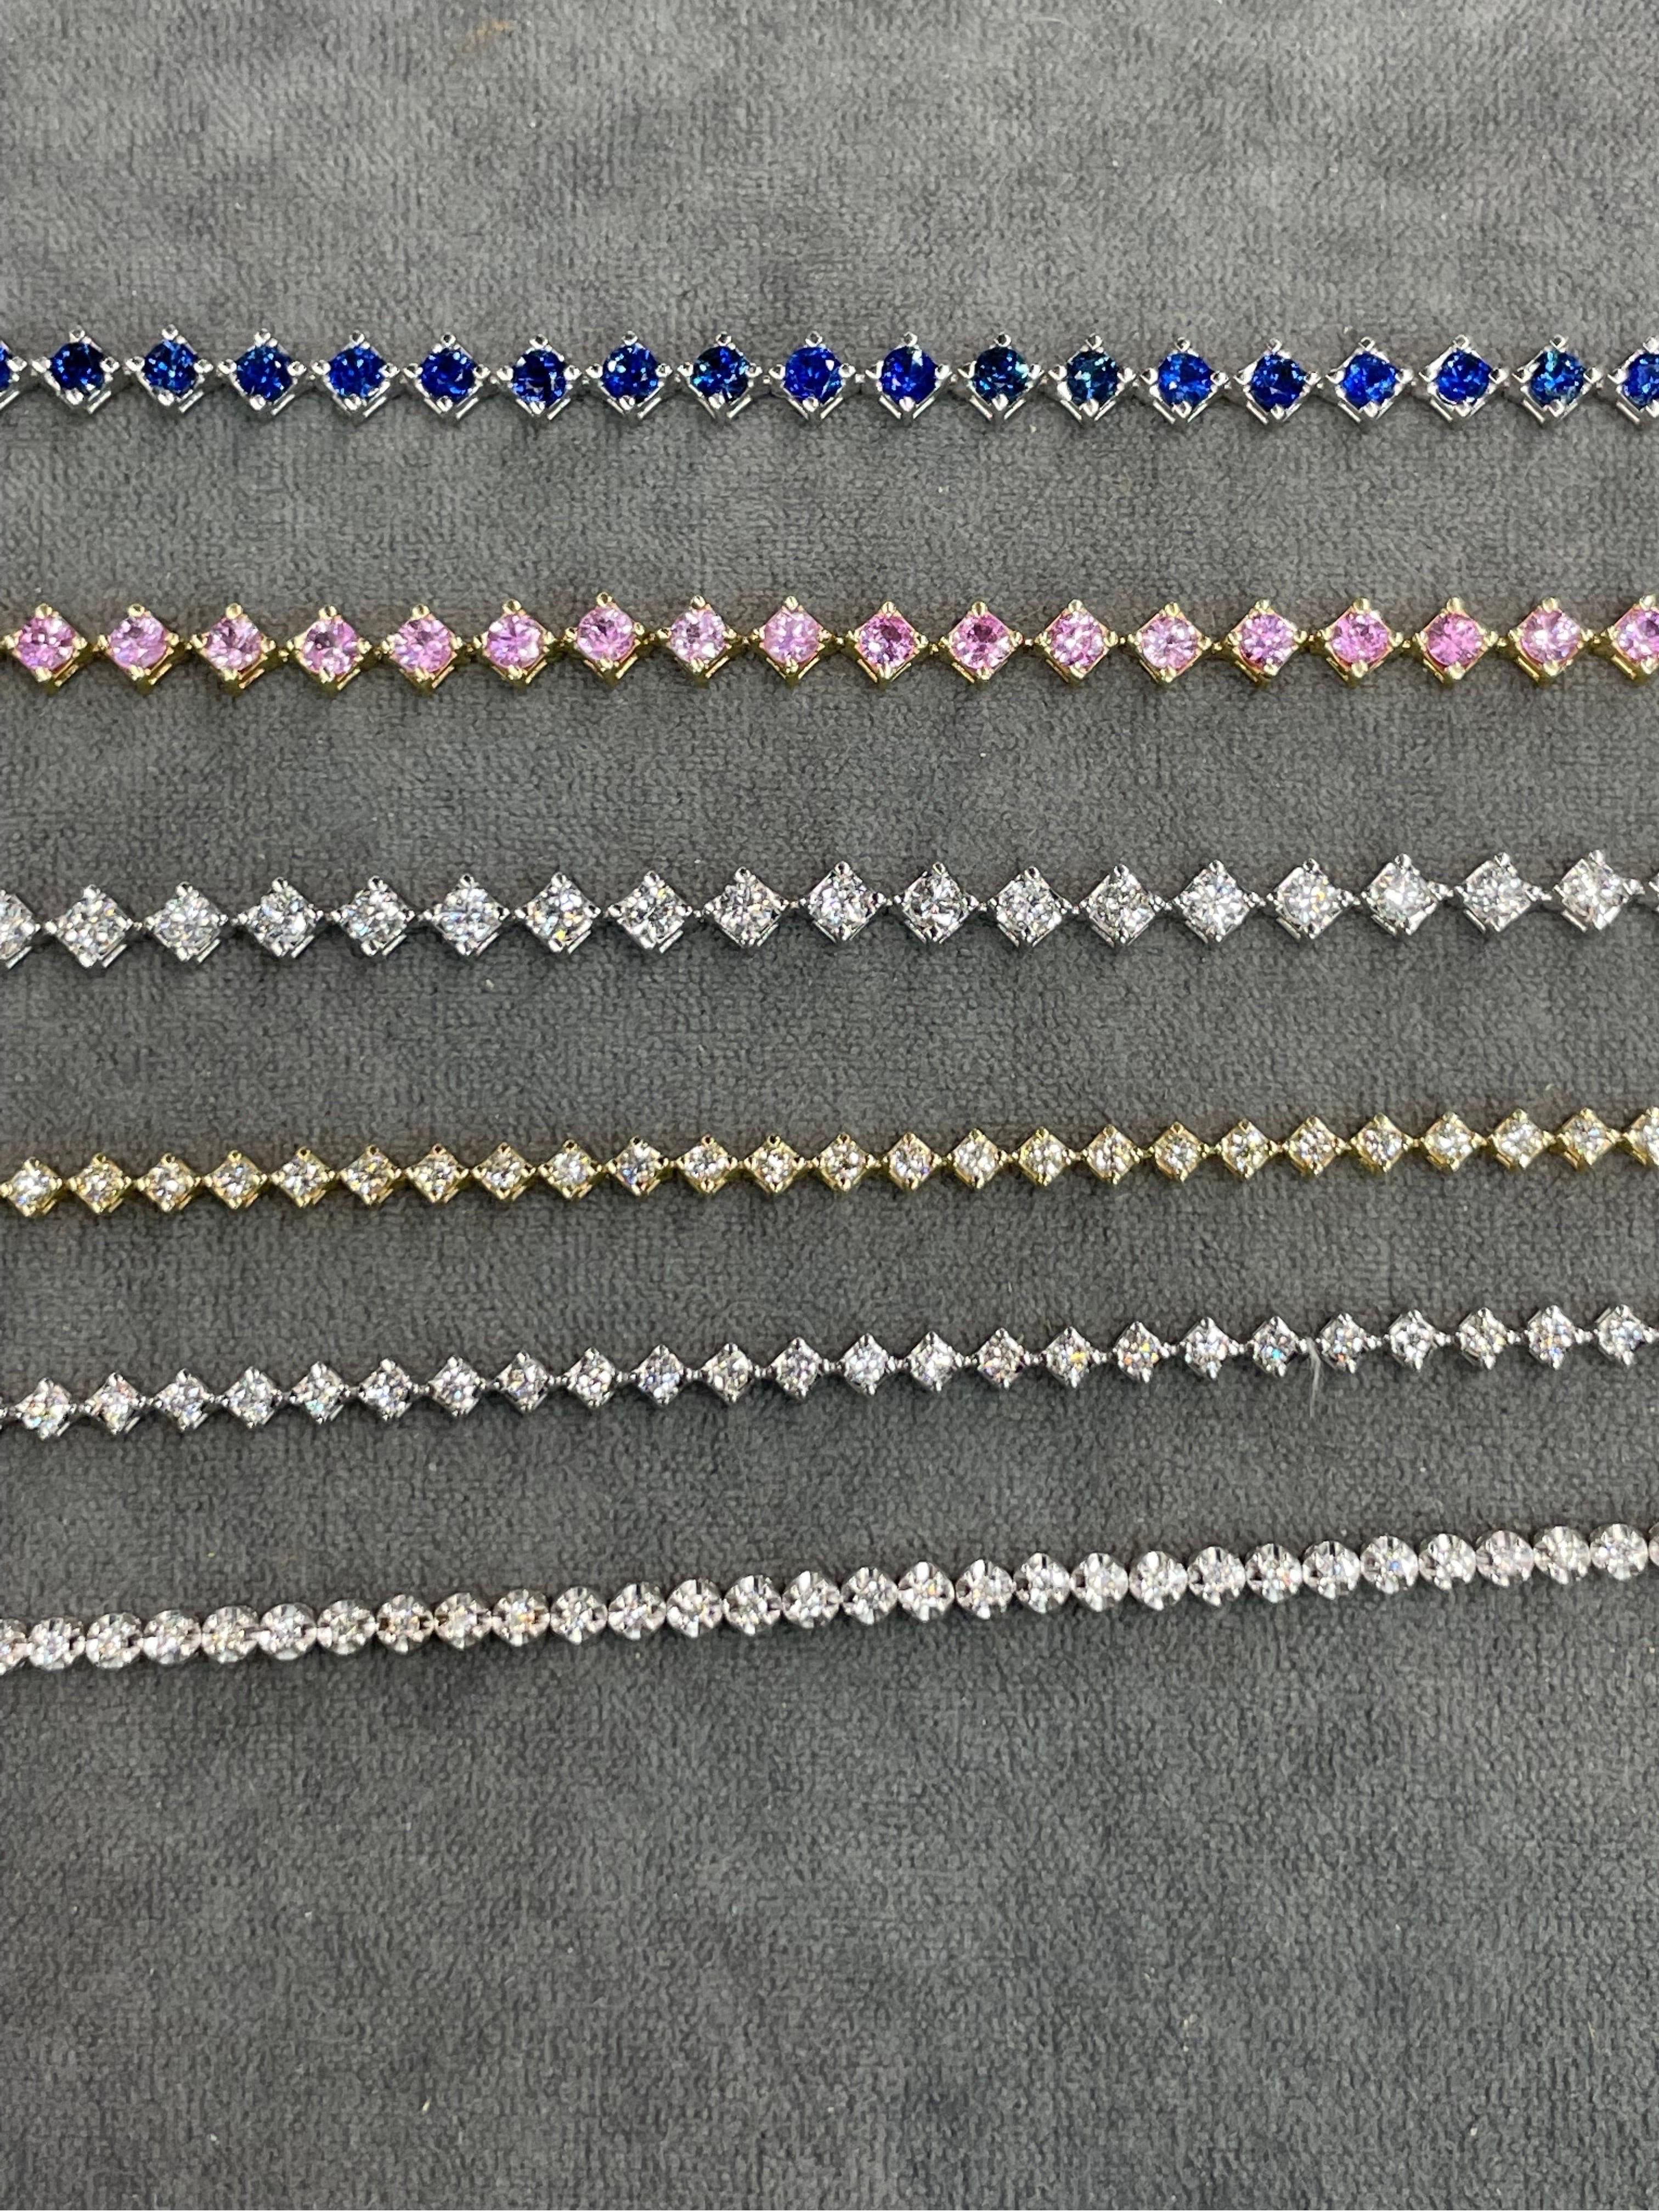 Pink Sapphire Choker Necklace & Bracelet 5.61 Carats 14k Yellow Gold Adjustable 5